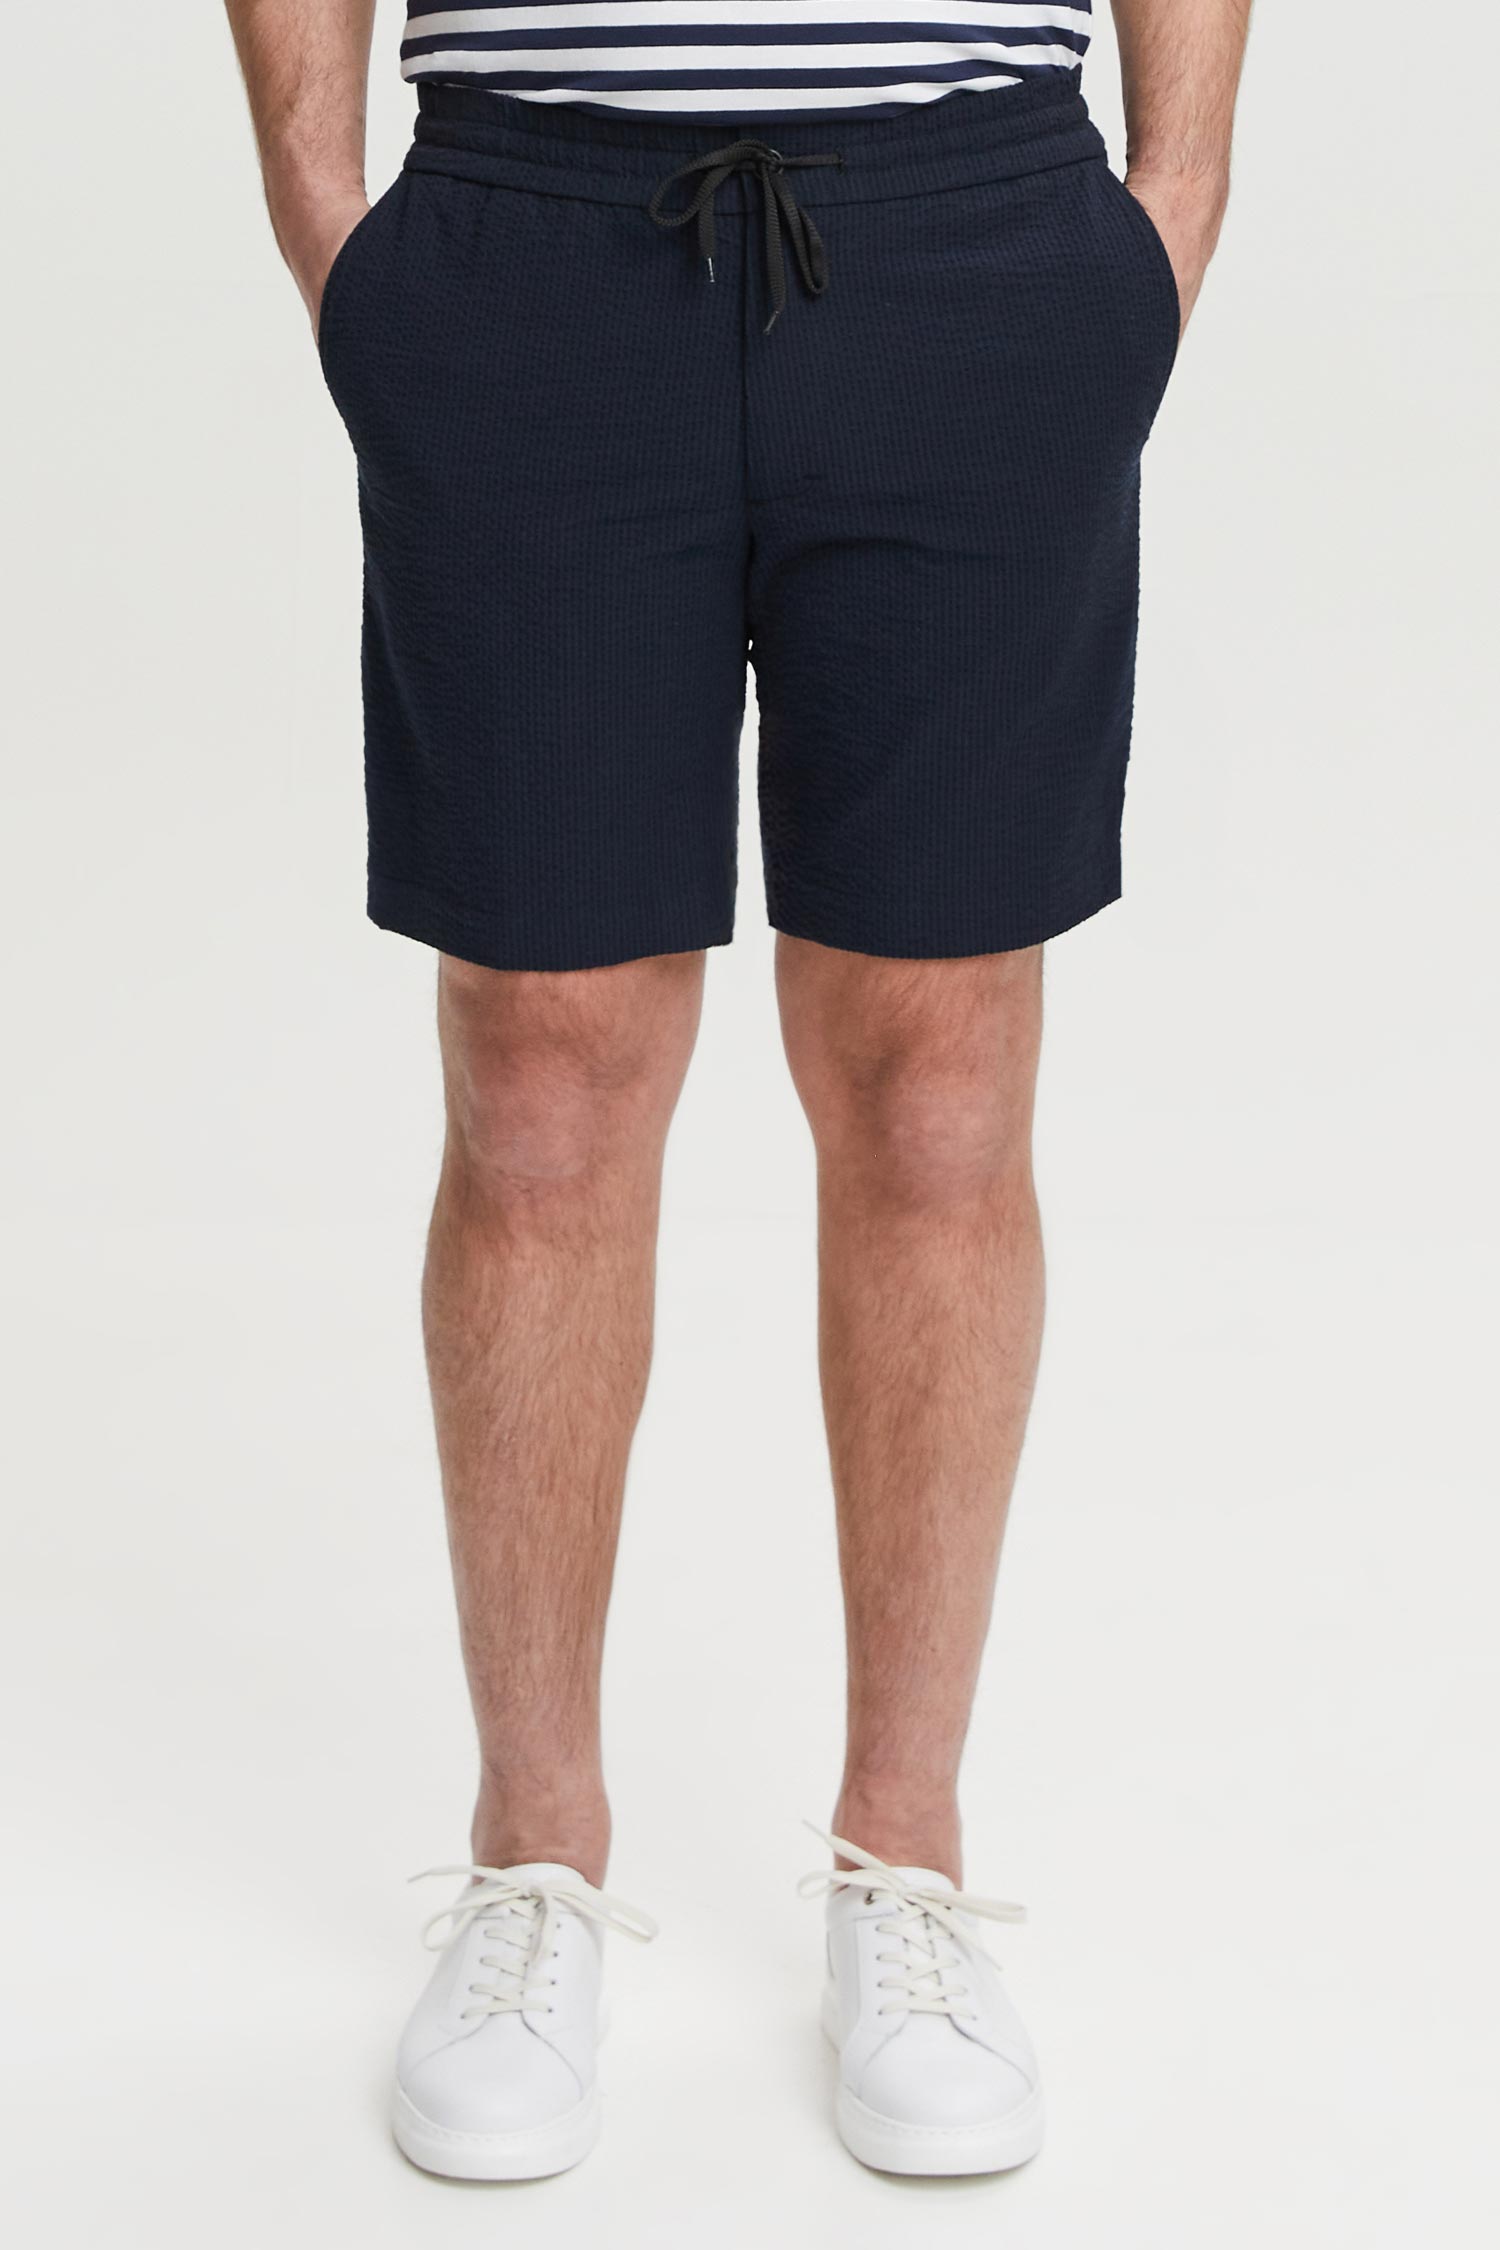 Tarmo Organic Cotton  Seersucker Shorts